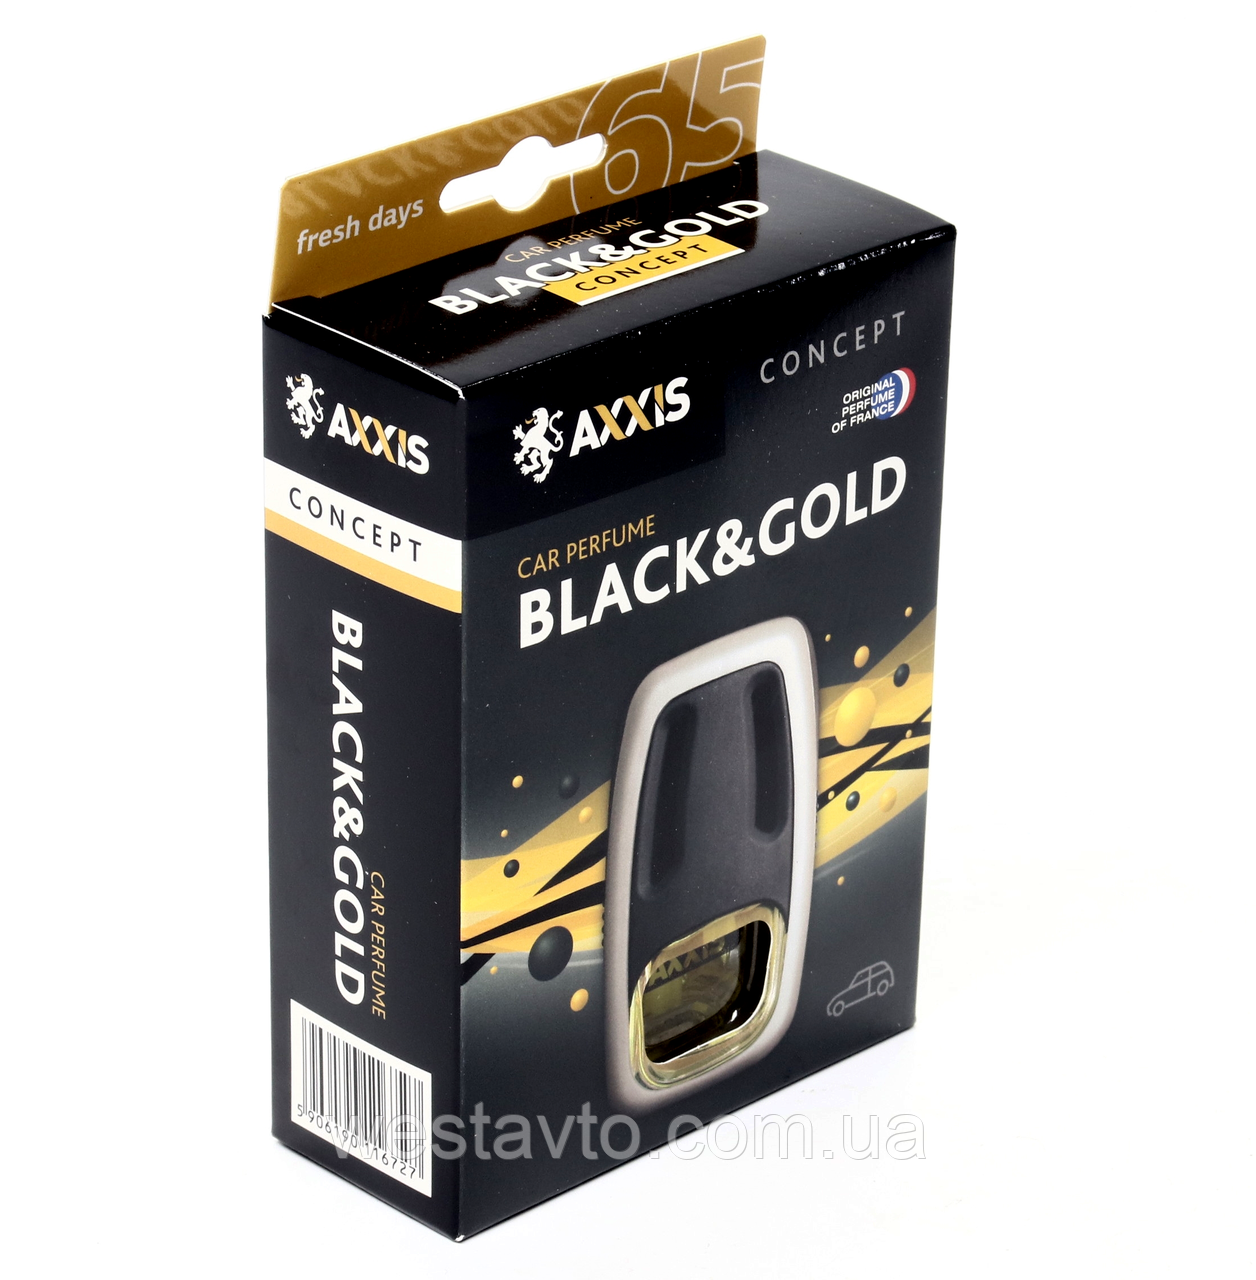 Ароматизатор AXXIS на дифлектор "Concept" — 8 ml, запах Black Gold-Perfume